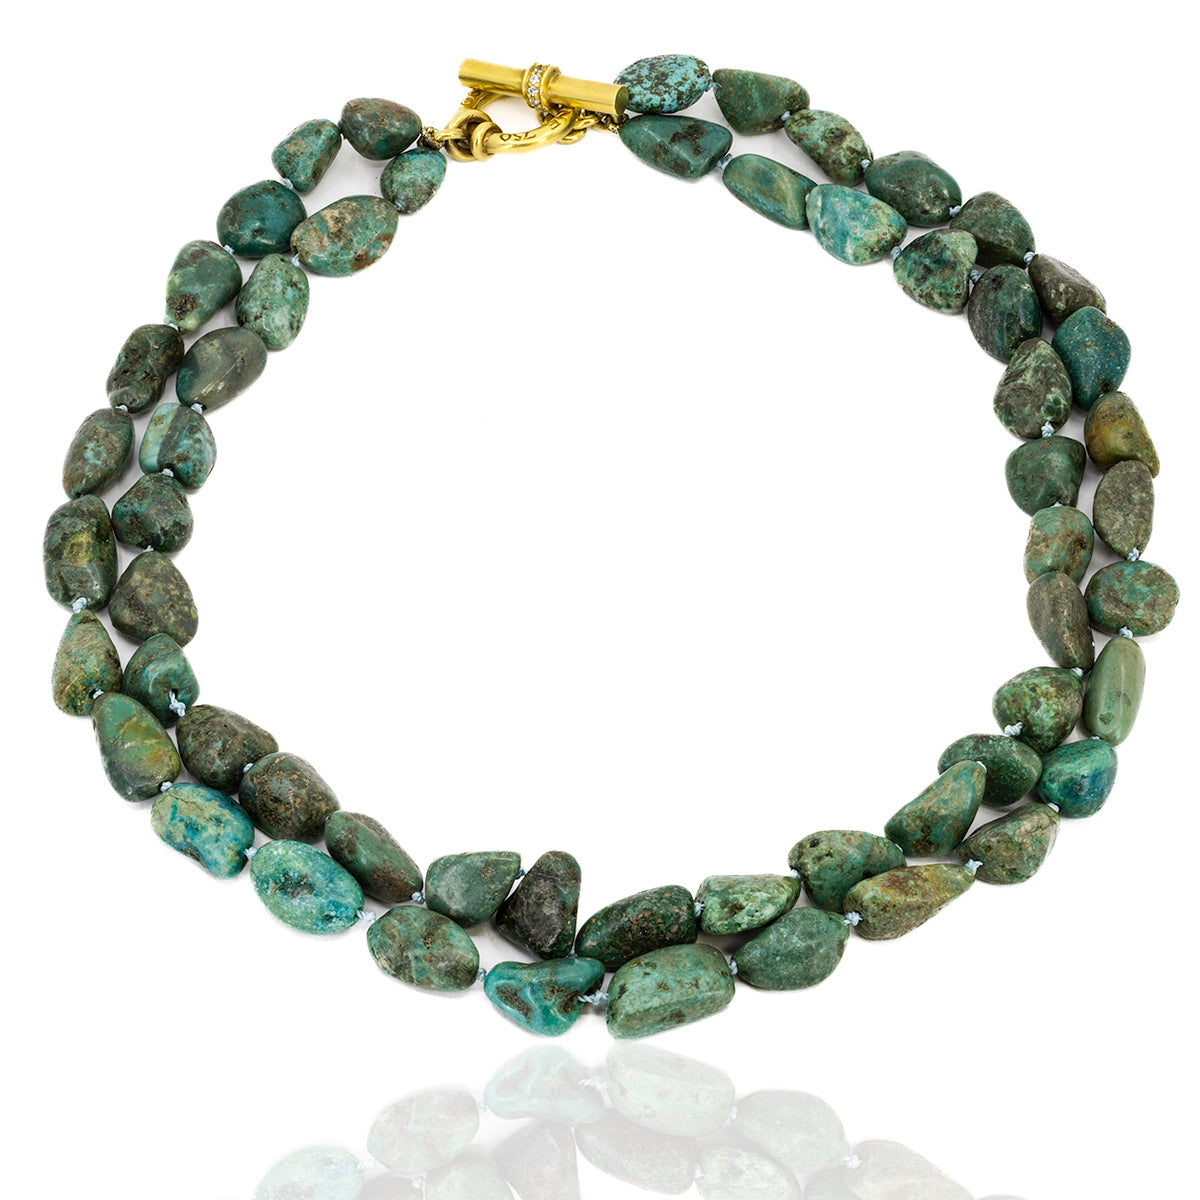 "Slane Jewelry" Turquoise Necklace With 18k DIamond Clasp